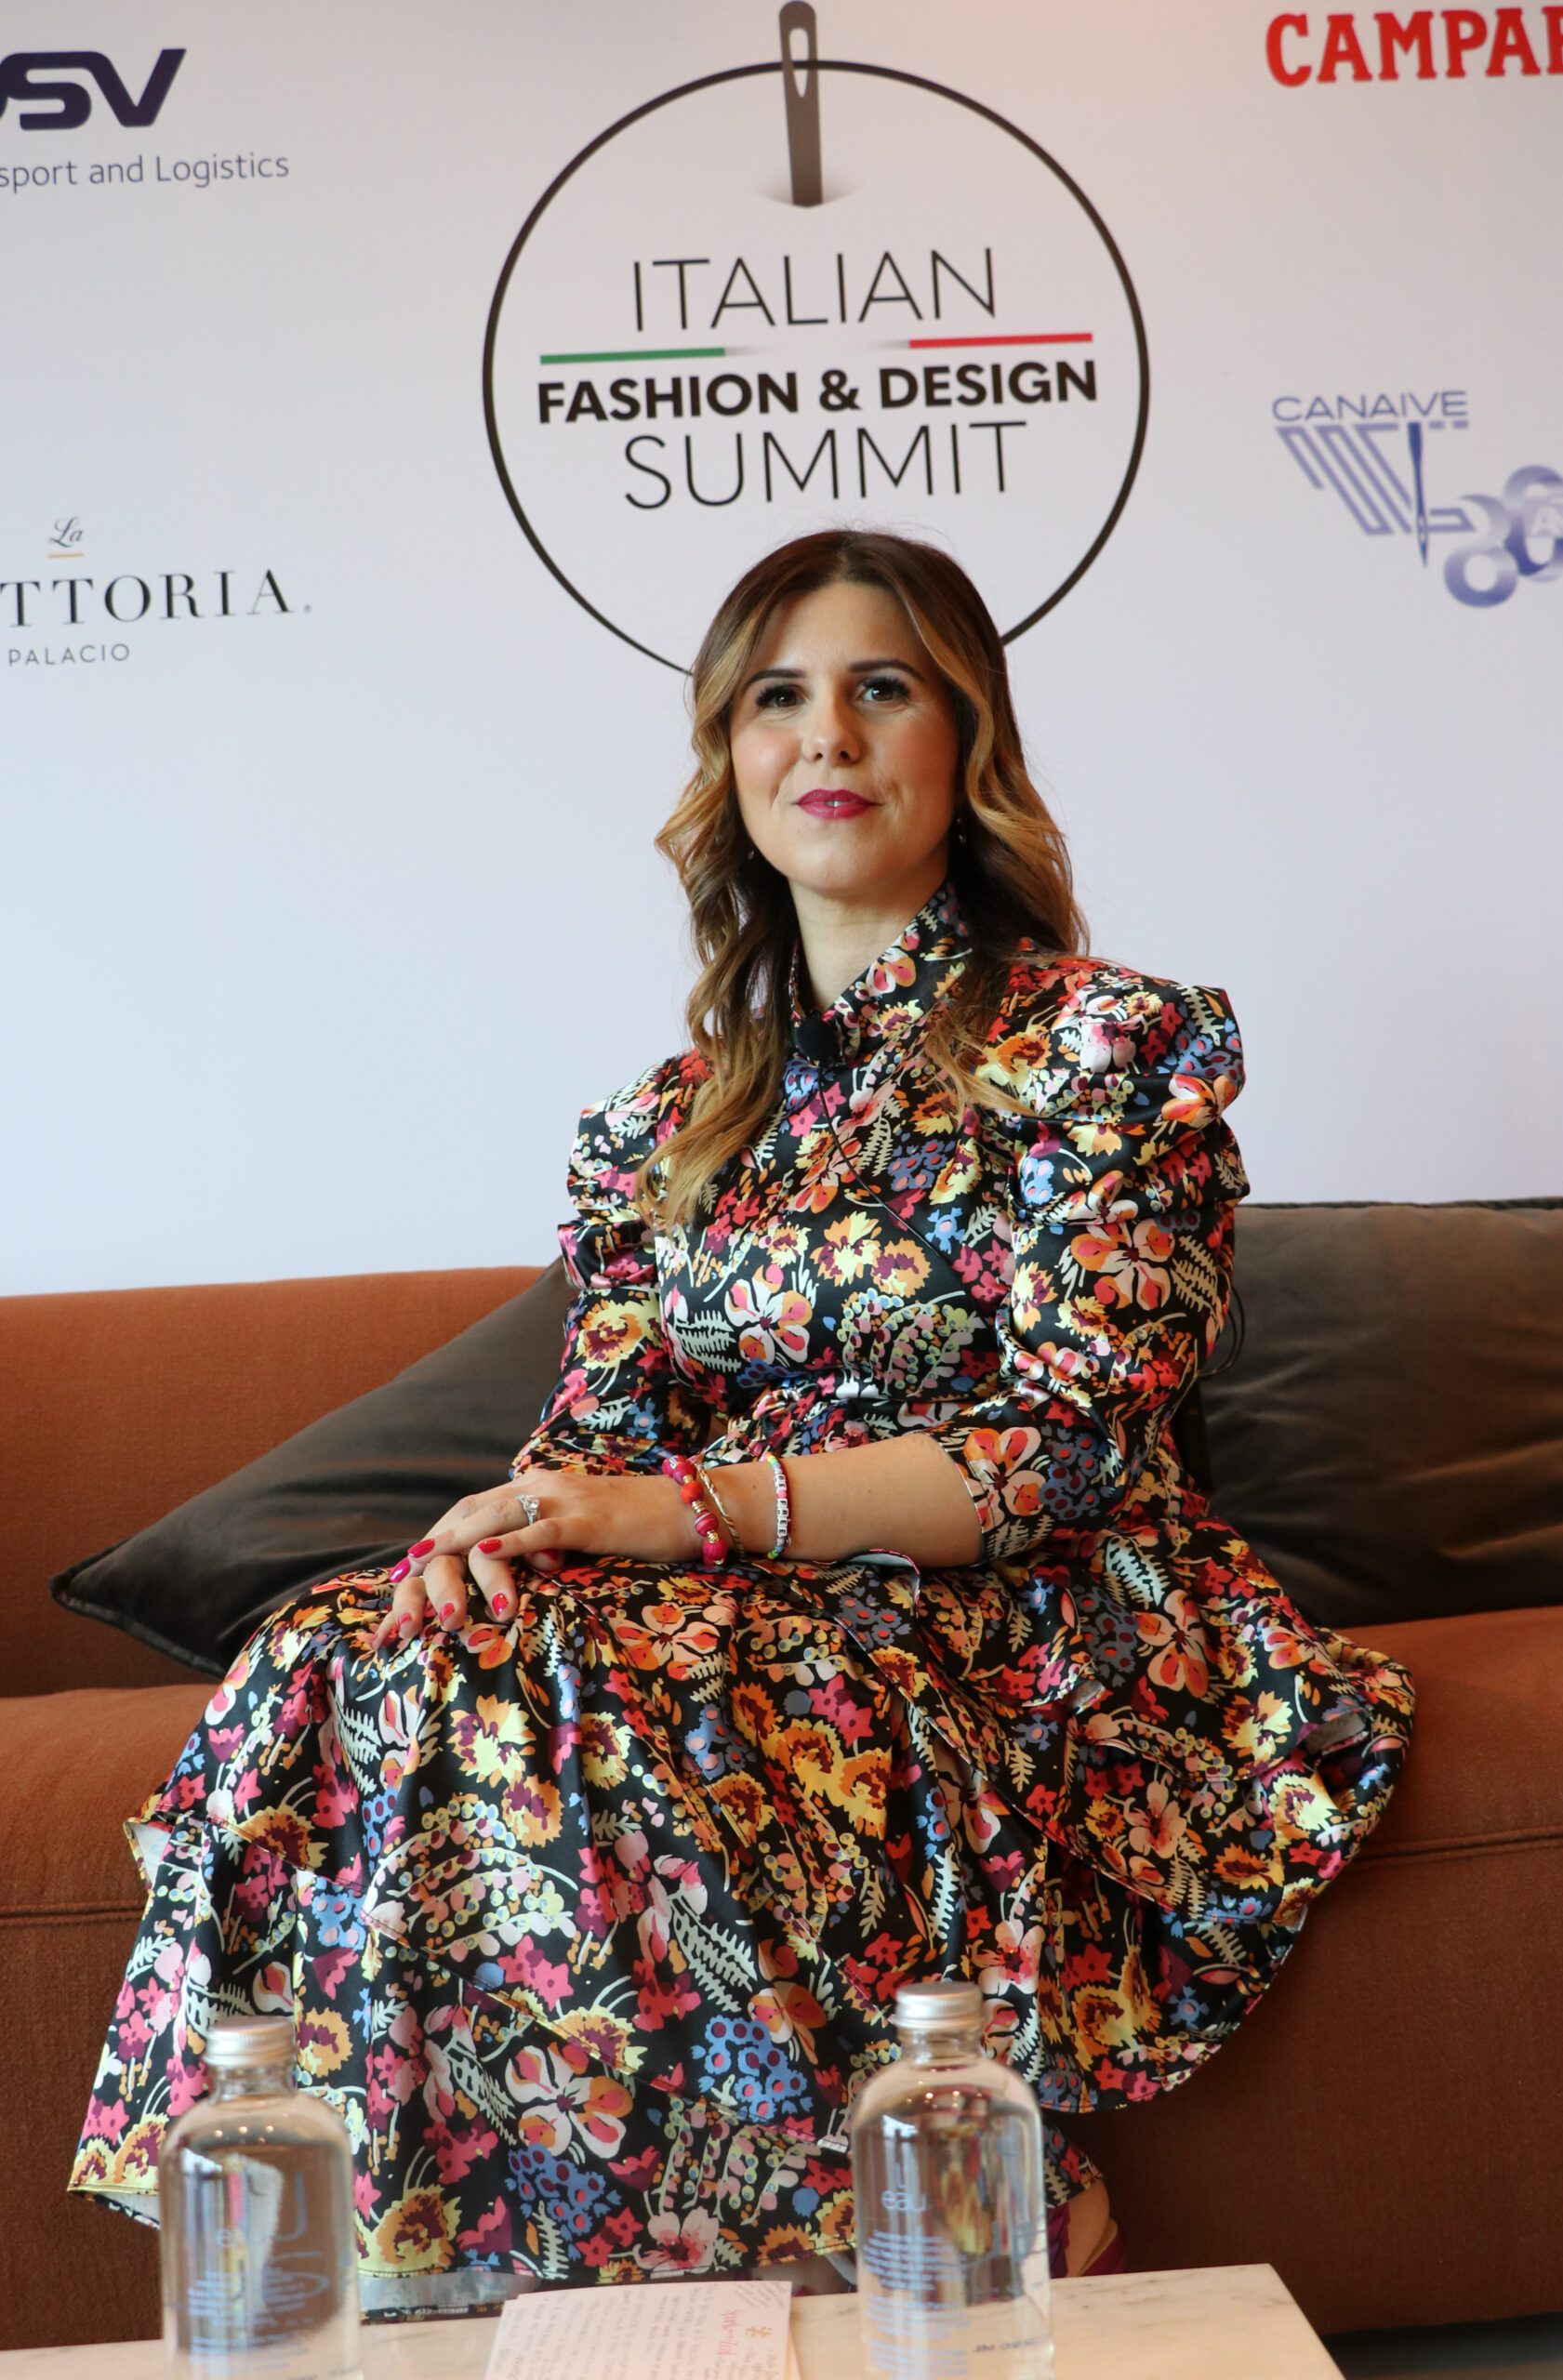 Italian Fashion & Design Summit